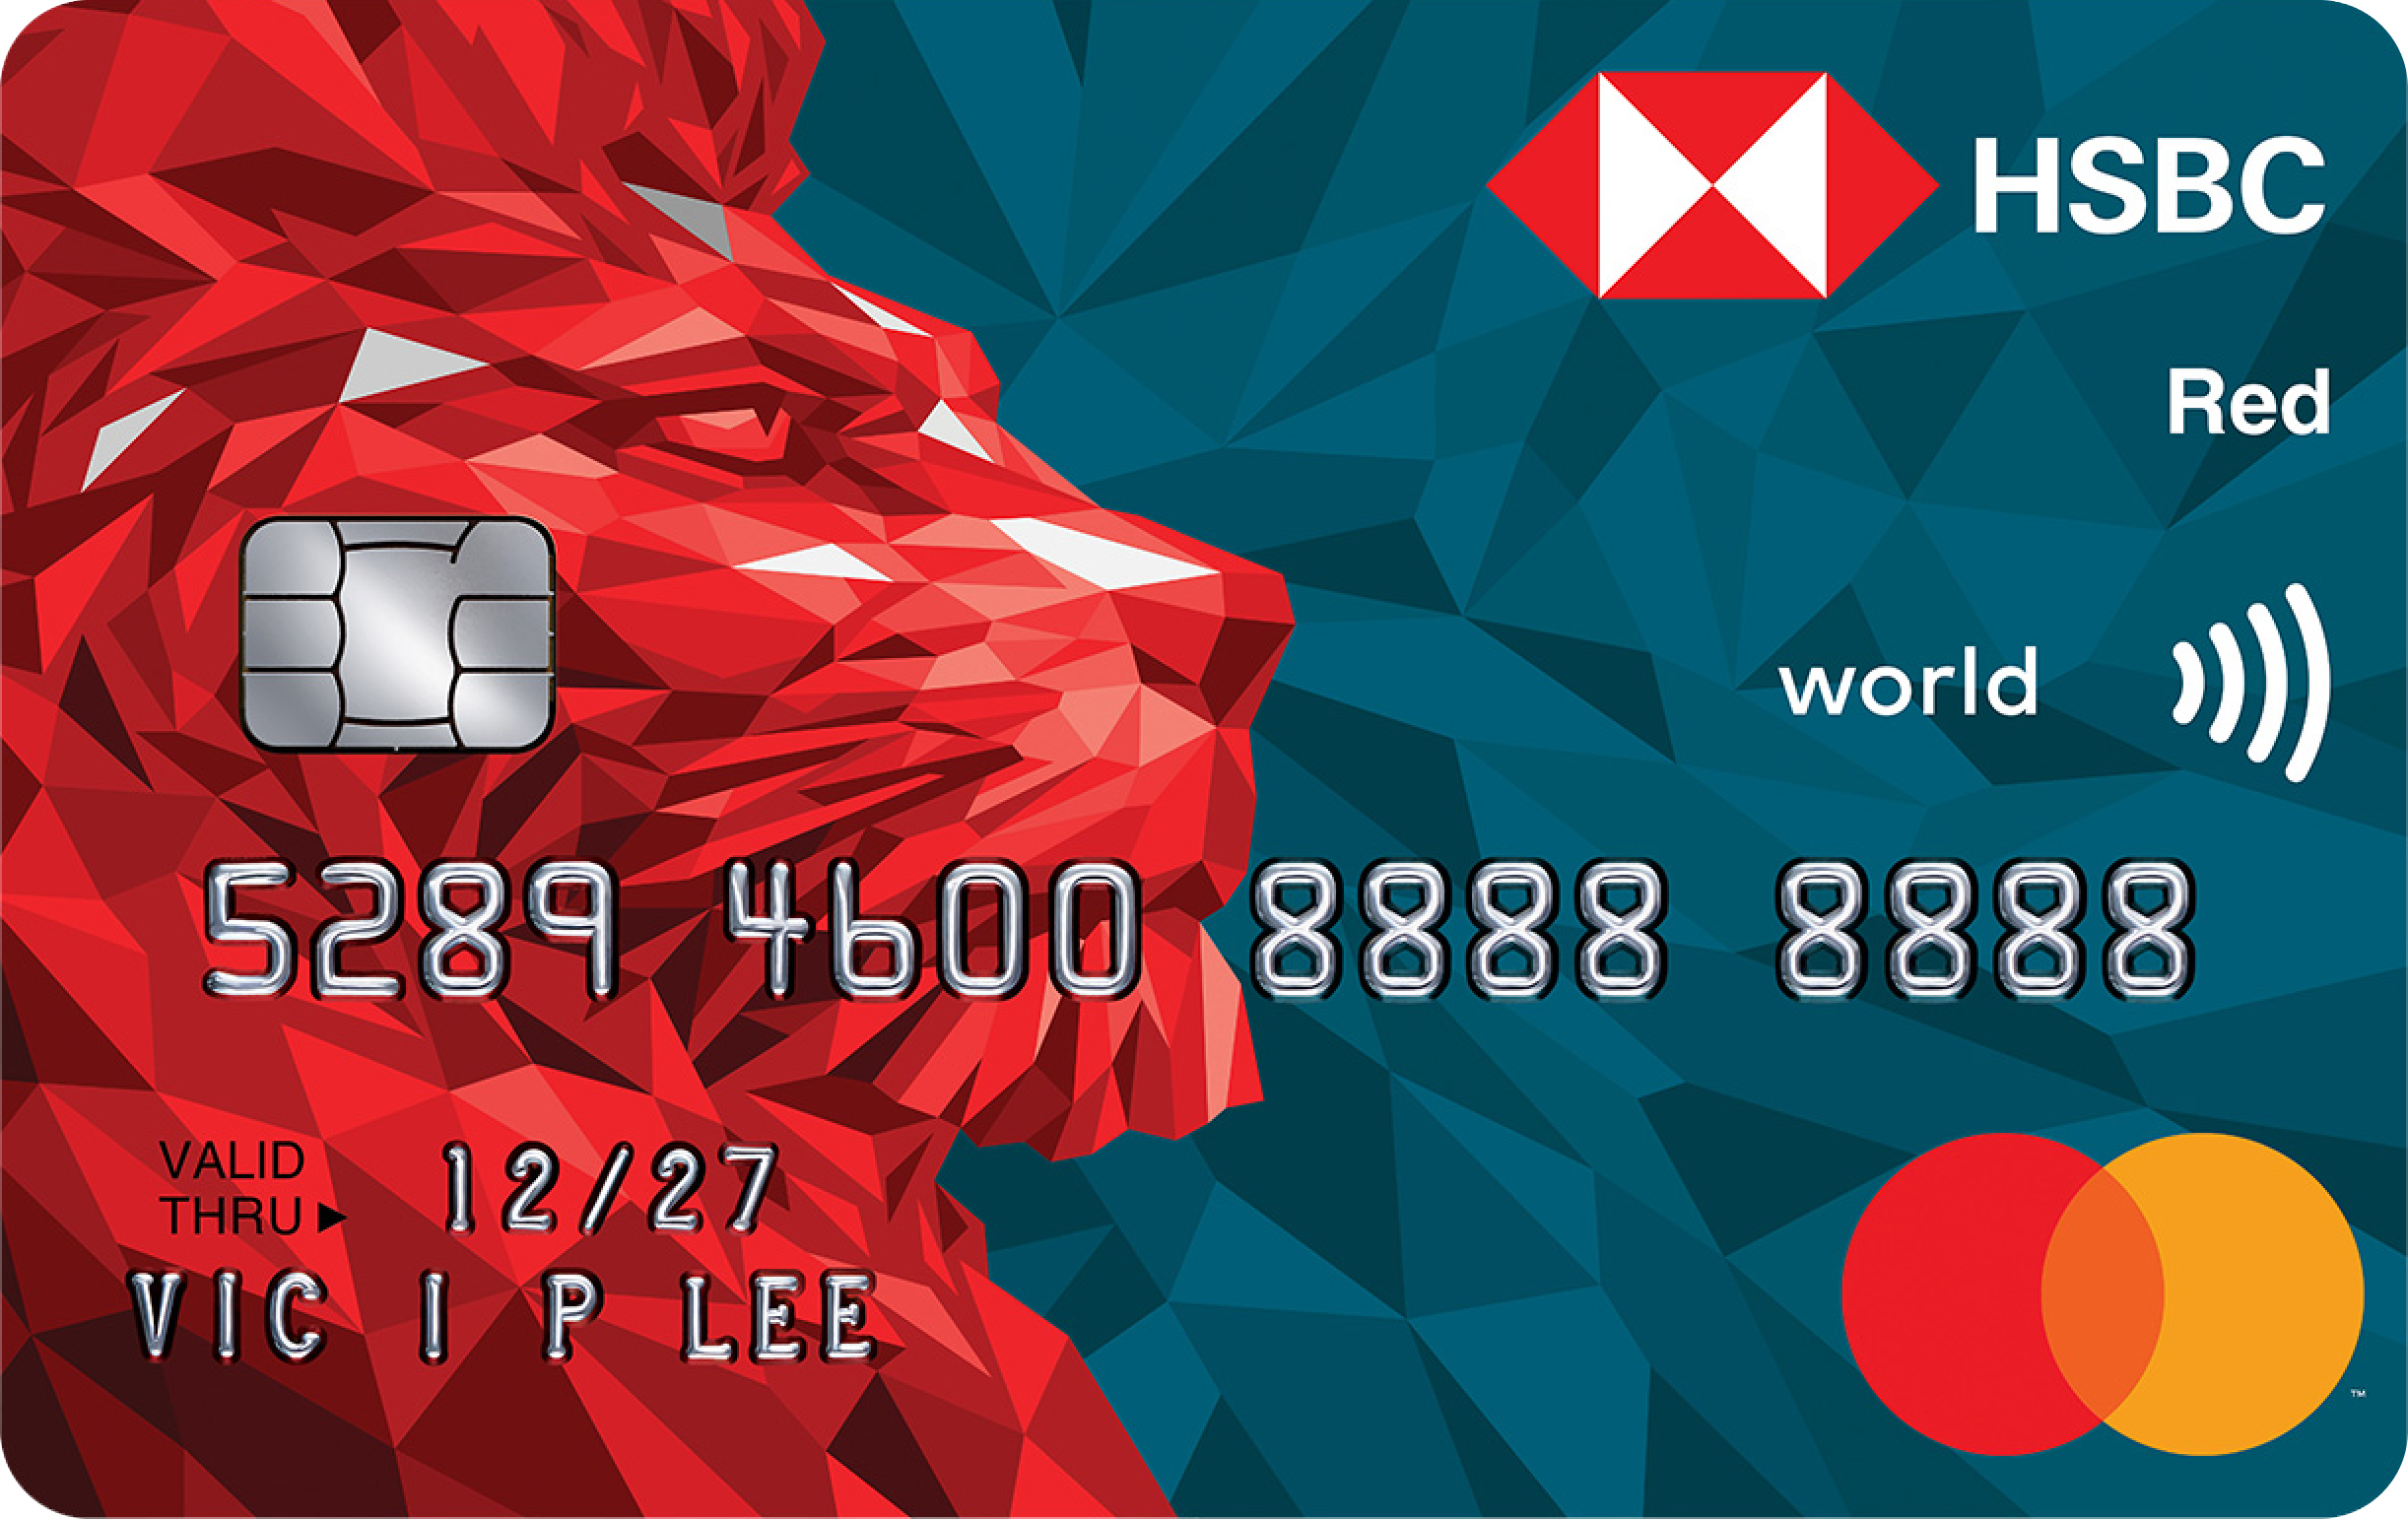 HSBC Red Credit Card